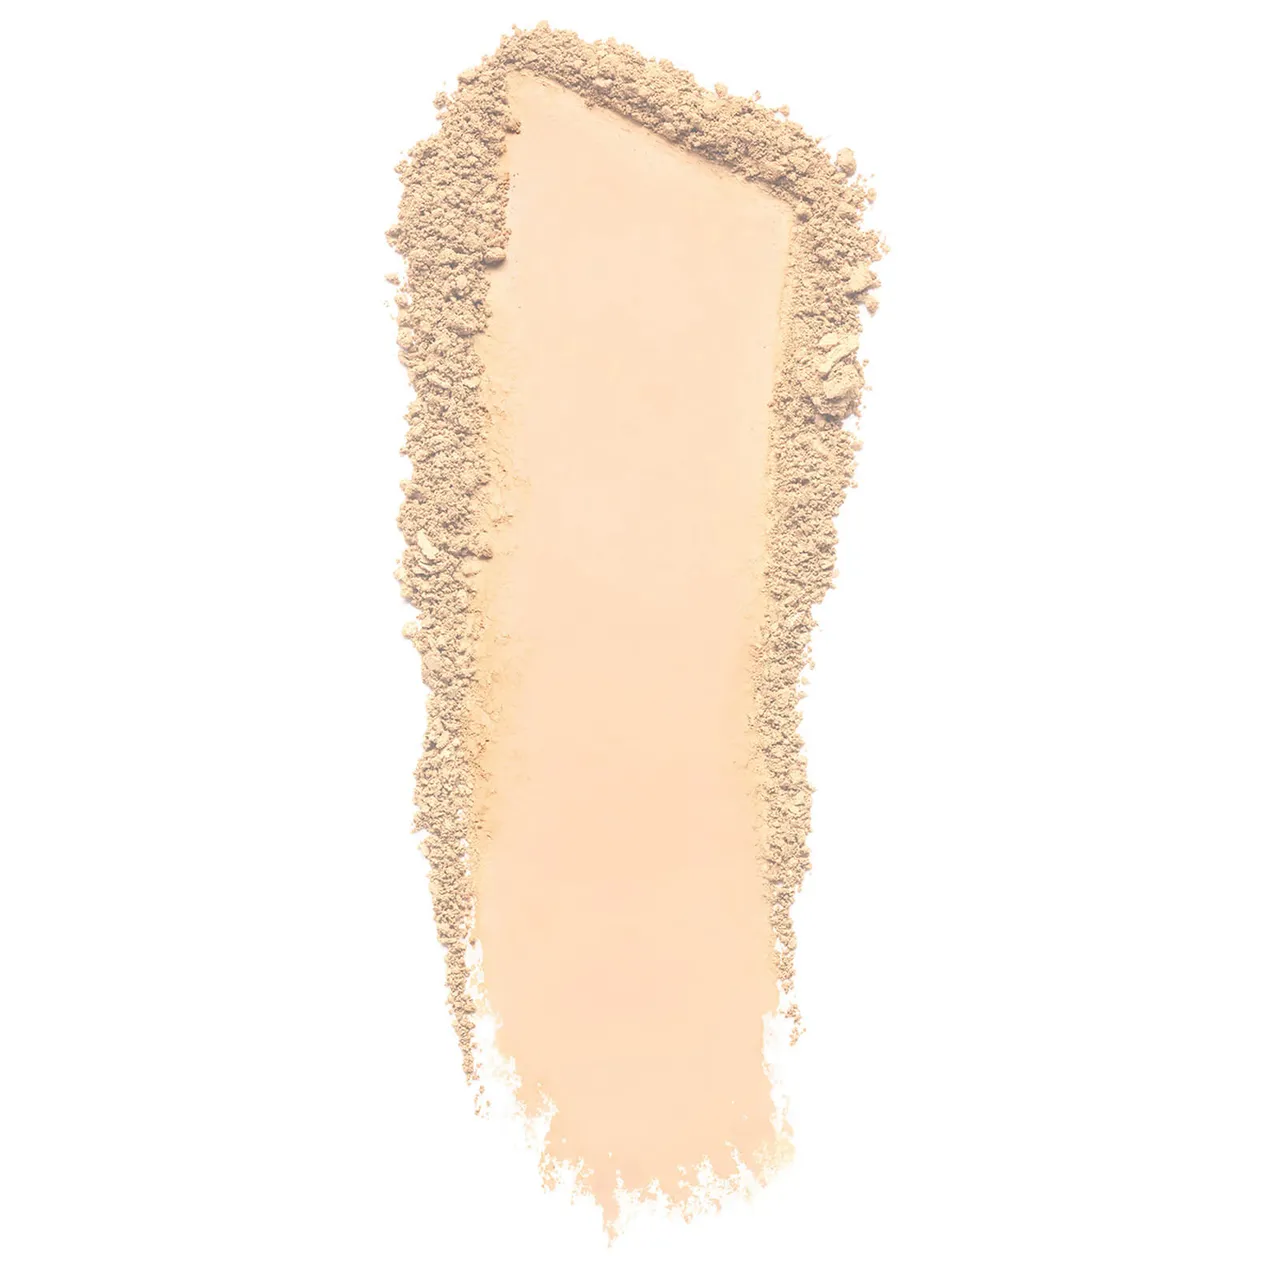 Estée Lauder Double Wear Stay-in-Place Matte Powder Foundation SPF10 12g (Various Shades) - 2N1 Desert Beige